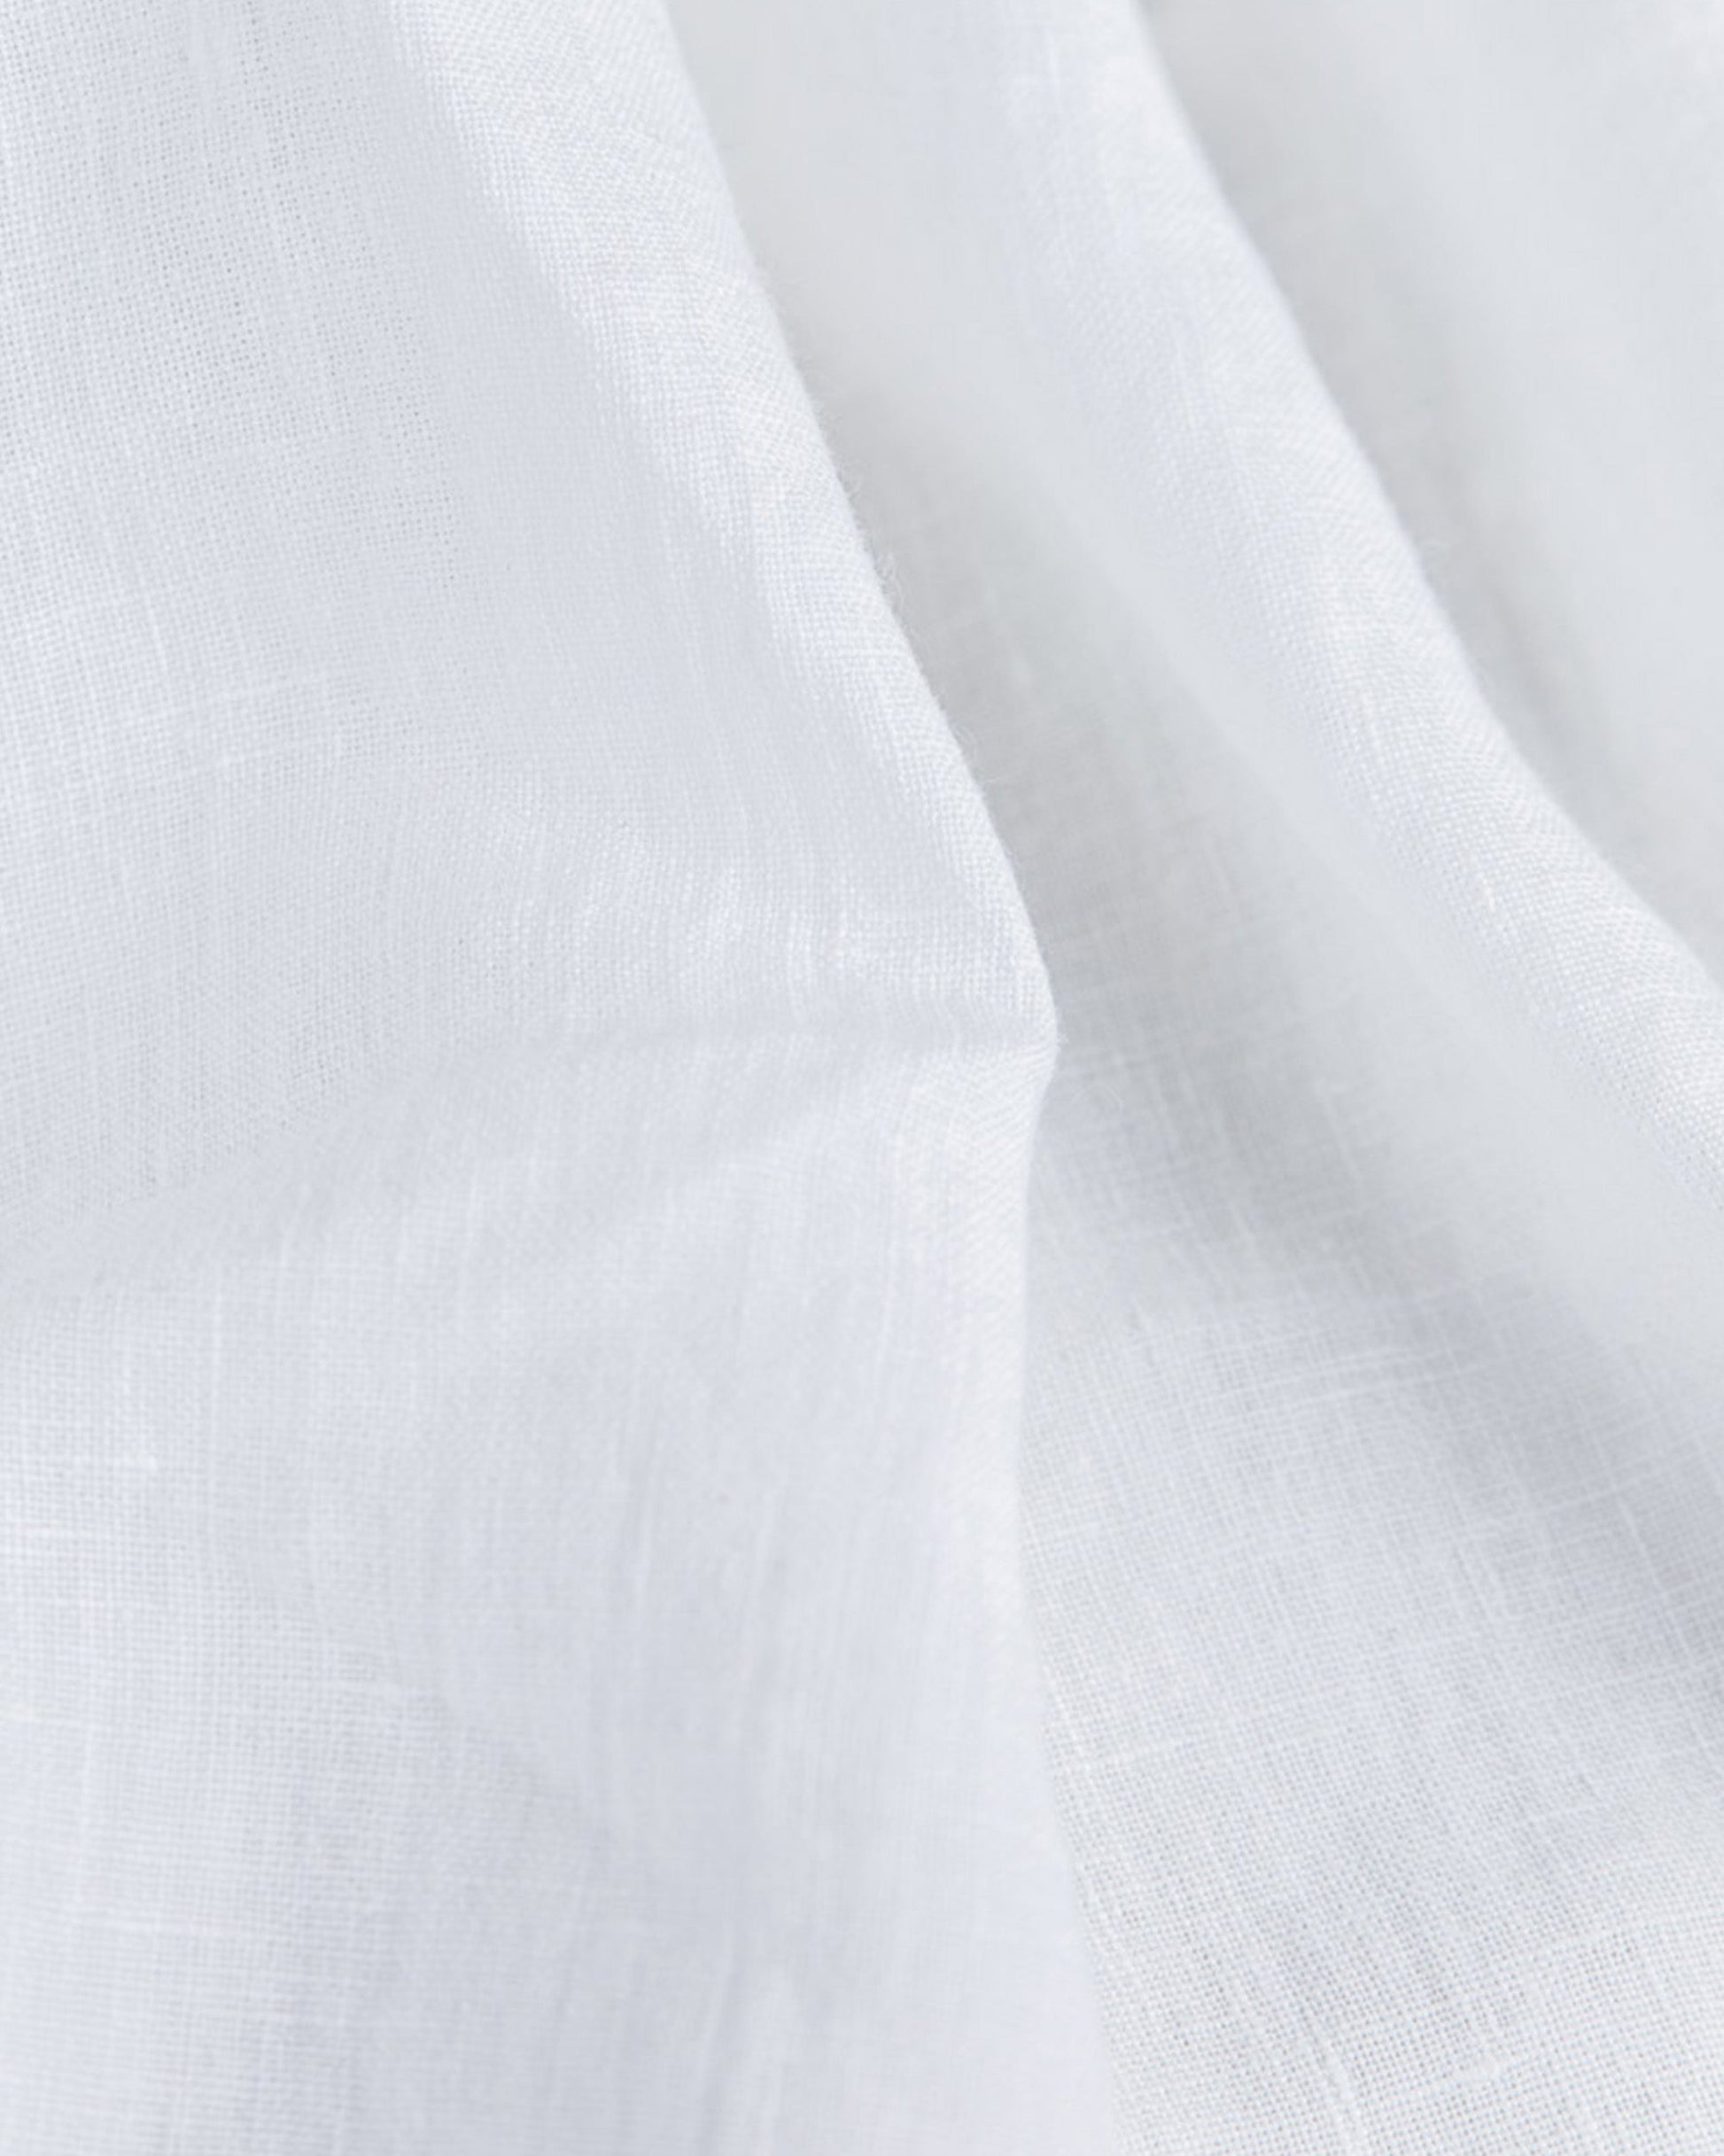 White linen flat sheet - sneakstylesanctums